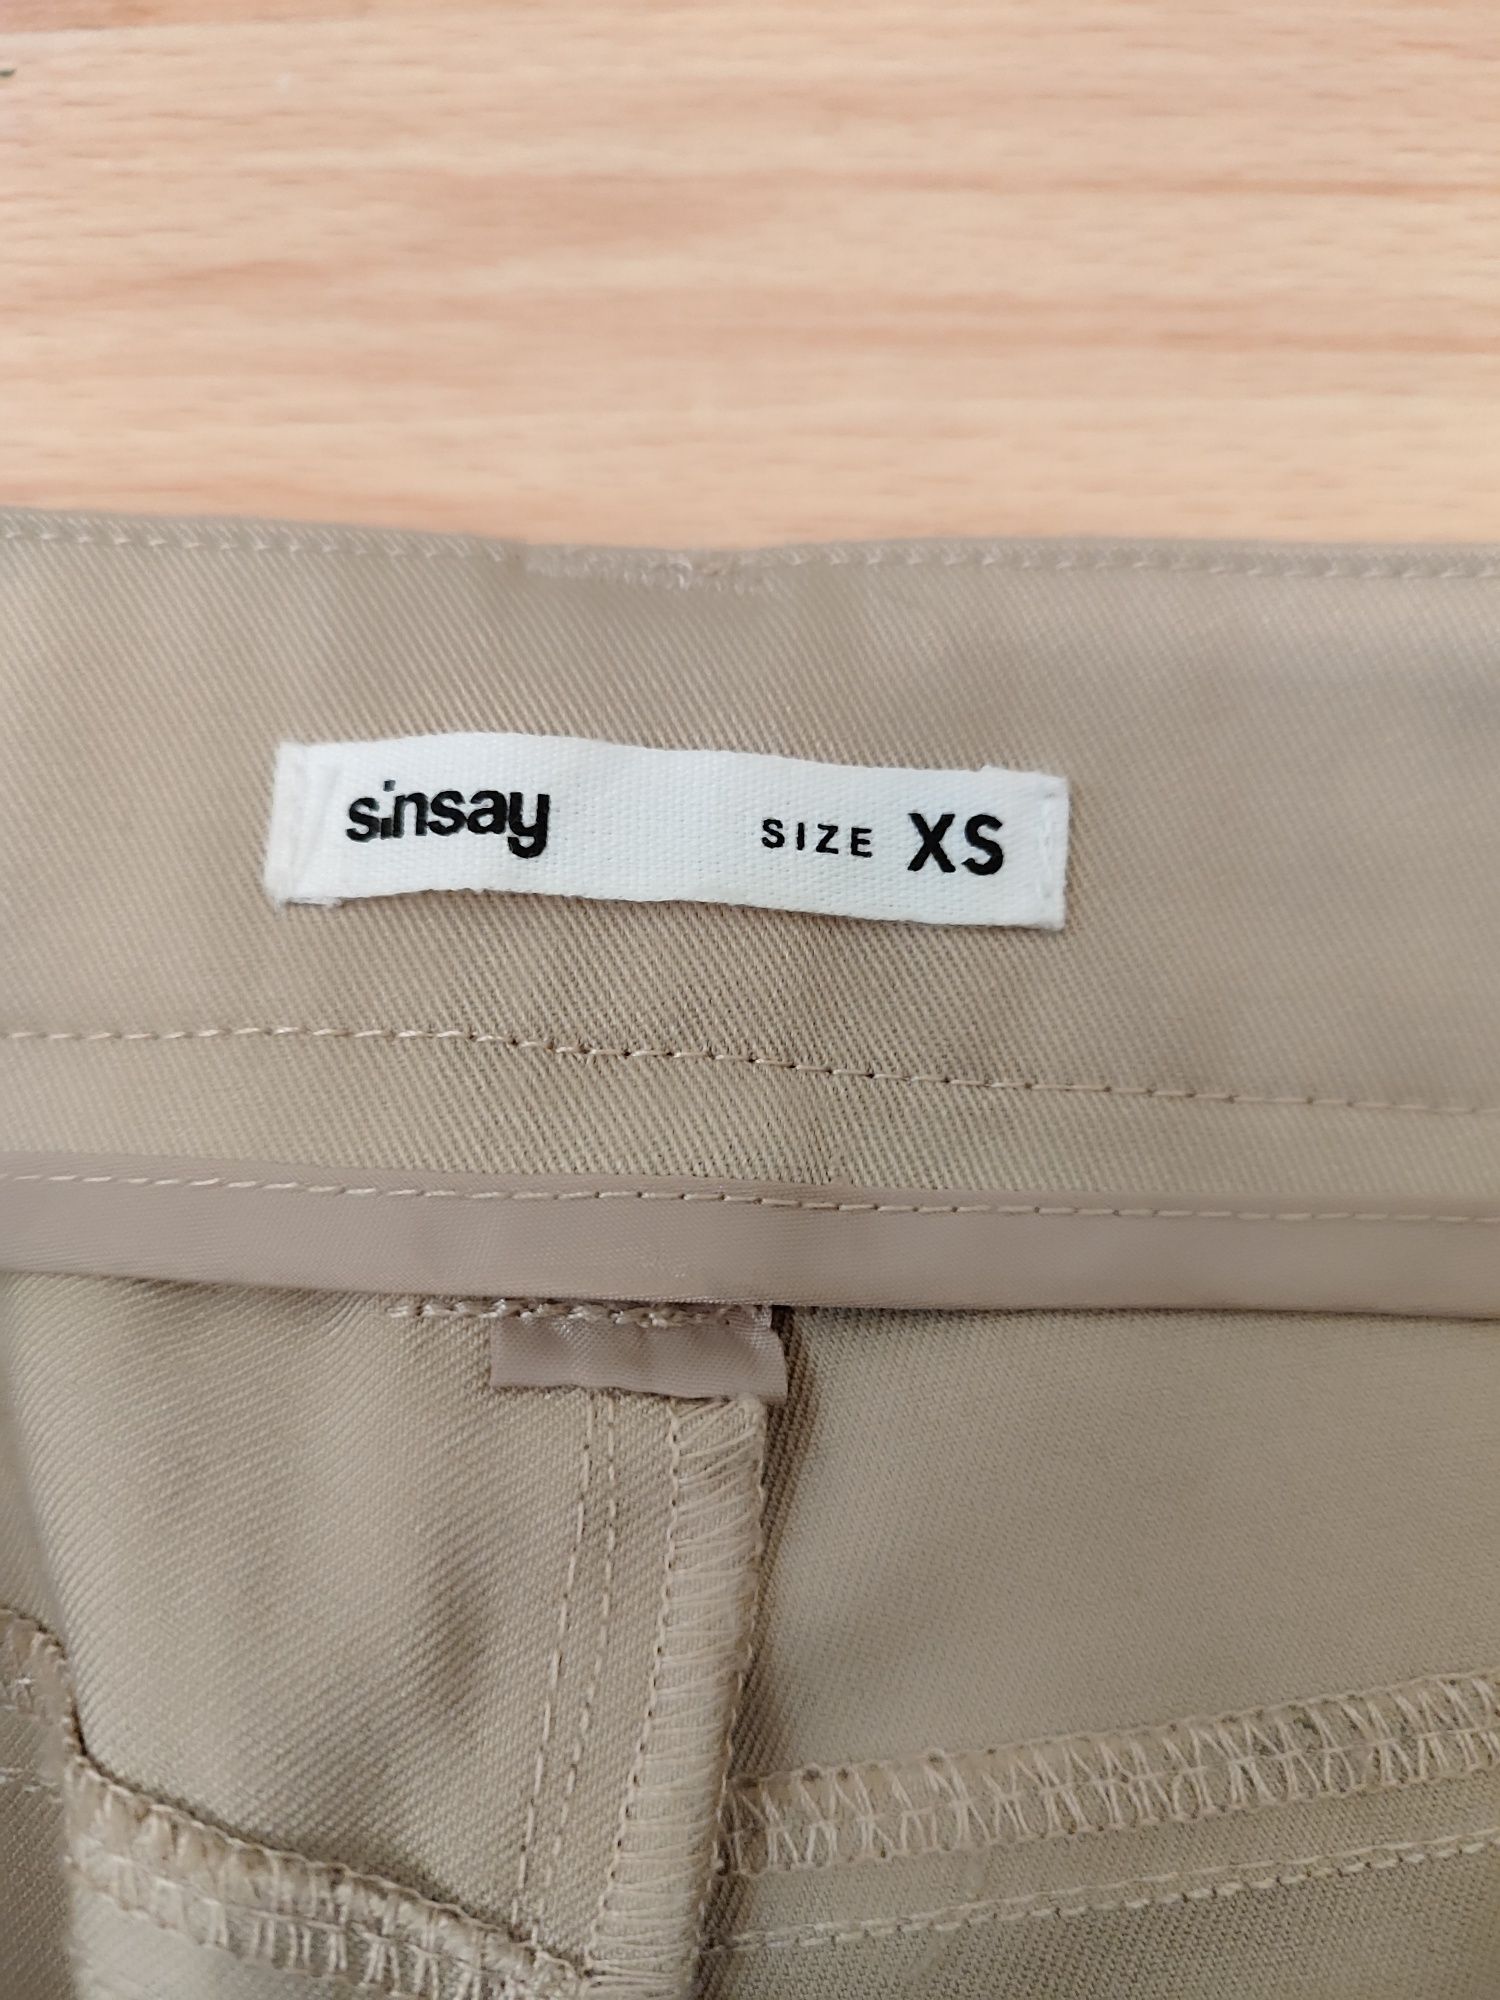 Продам штани Sinsay loose high waist 7645J-80X